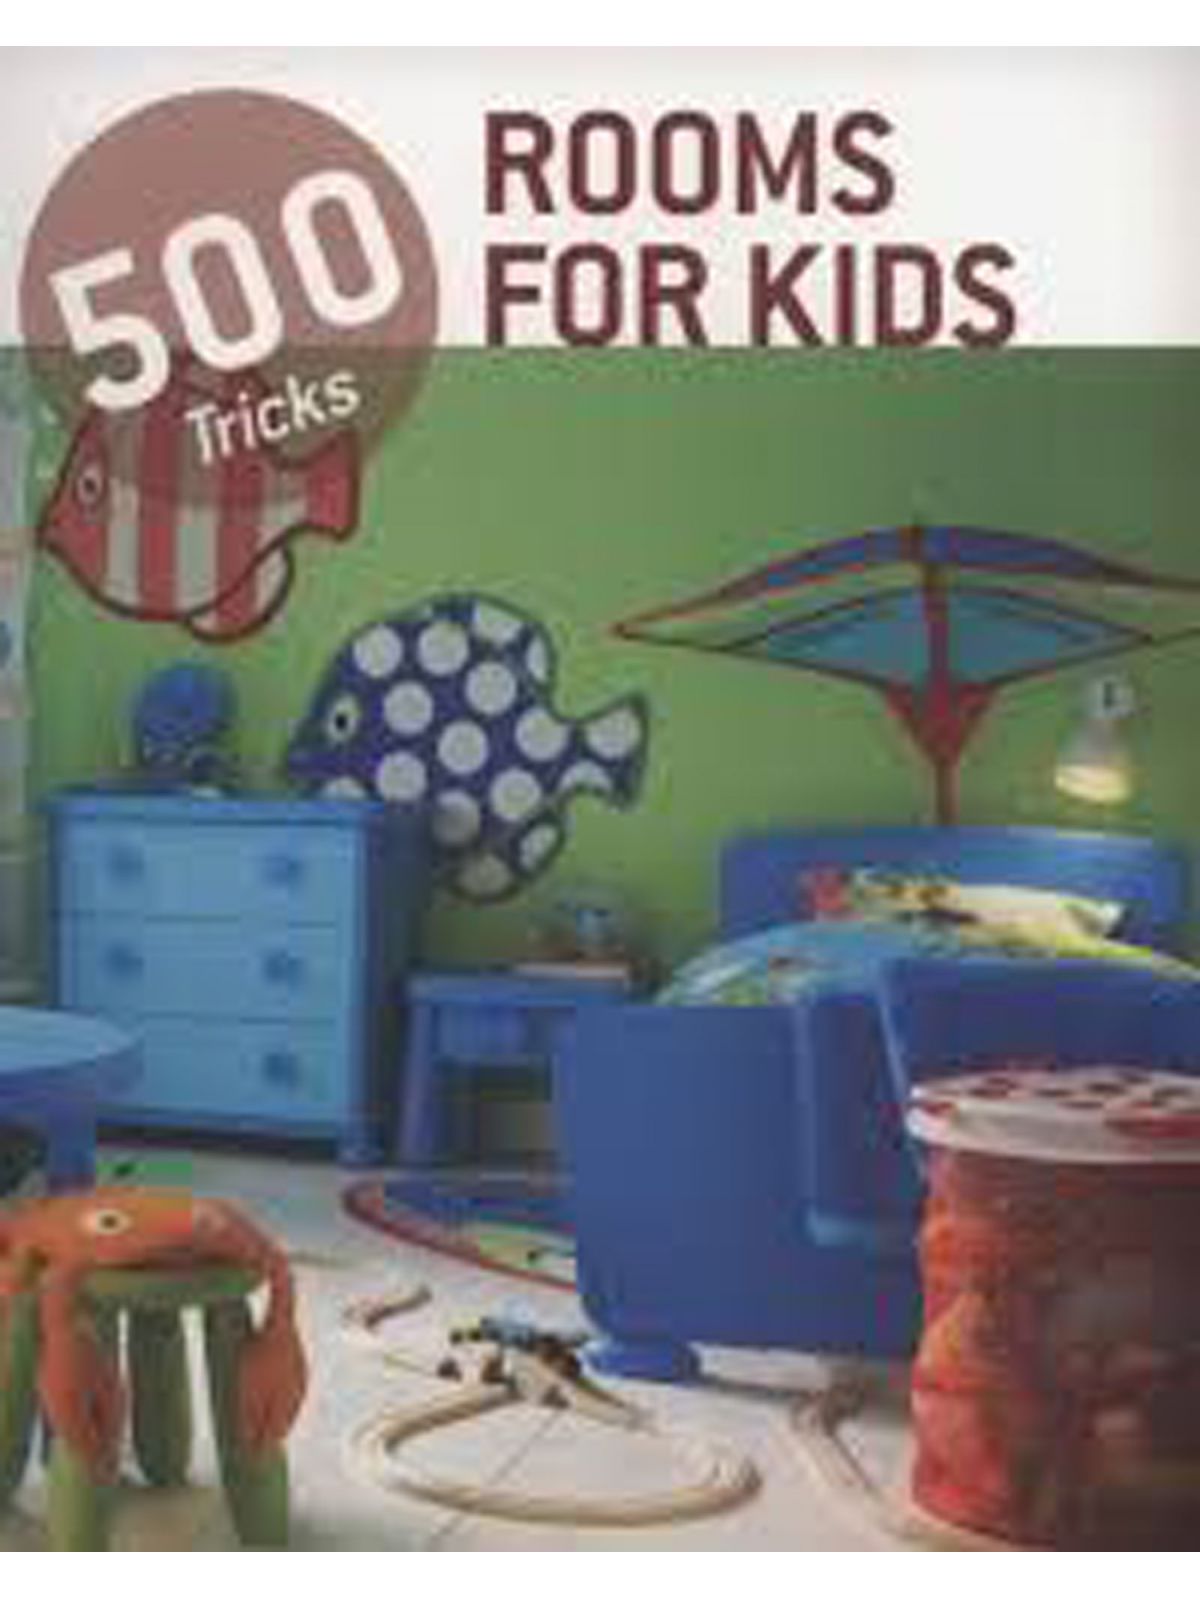 ROOMS FOR KIDS 500 TRICKS Купить Книгу на Английском